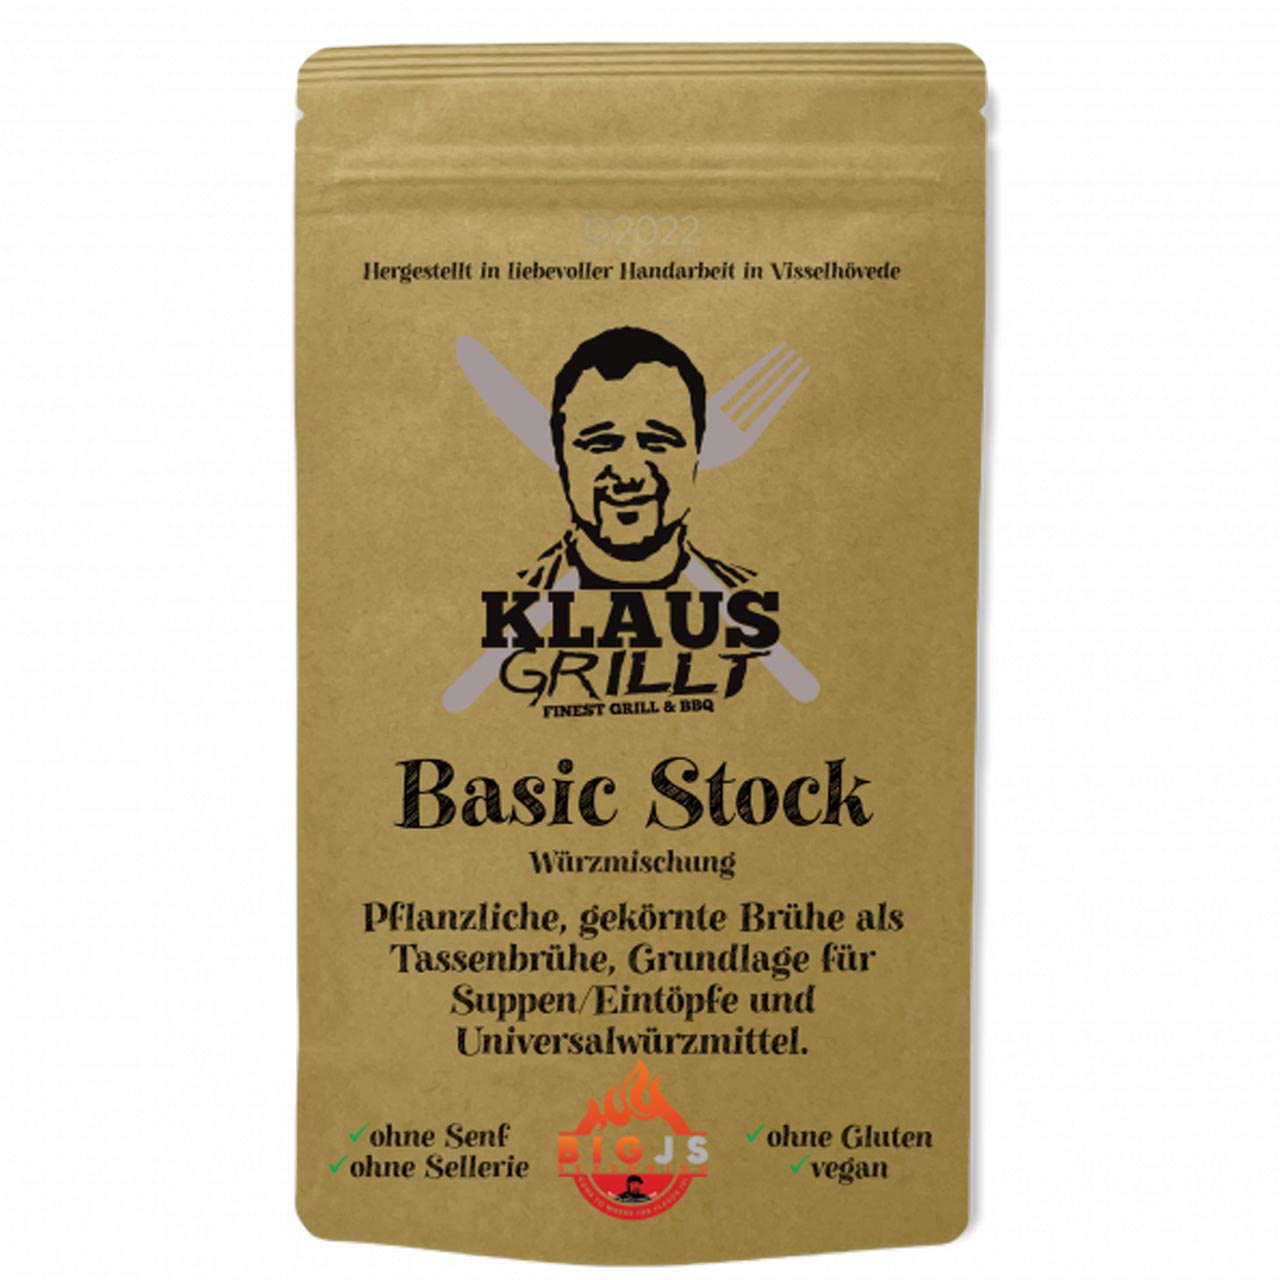 Klaus Grillt - Basic Stock 250g Standbeutel